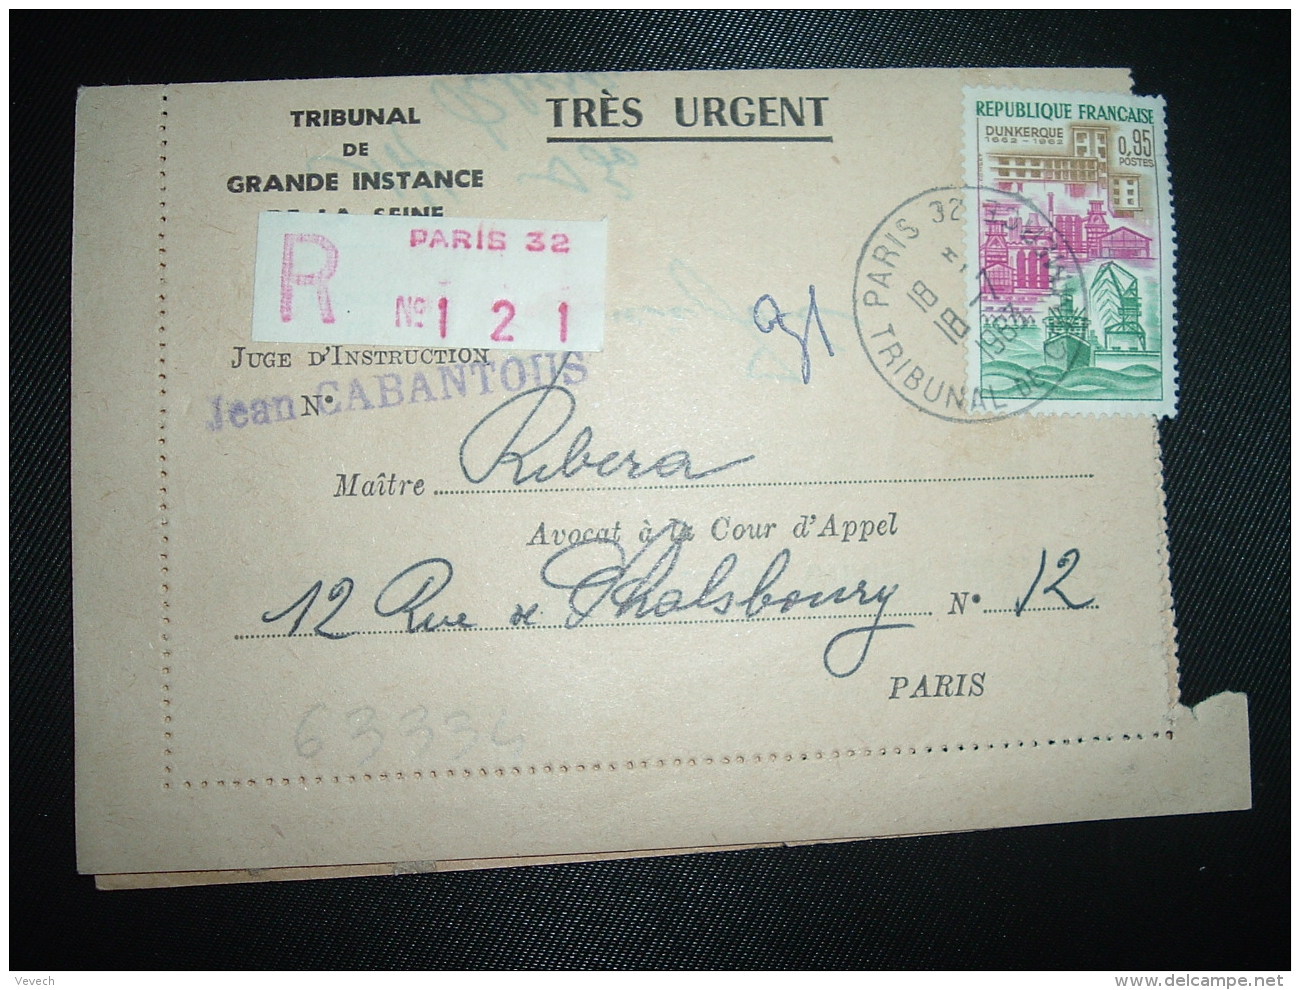 LR (PLI) TP DUNKERQUE 0,95 OBL.18-7-1963 PARIS 32 - Tarifs Postaux